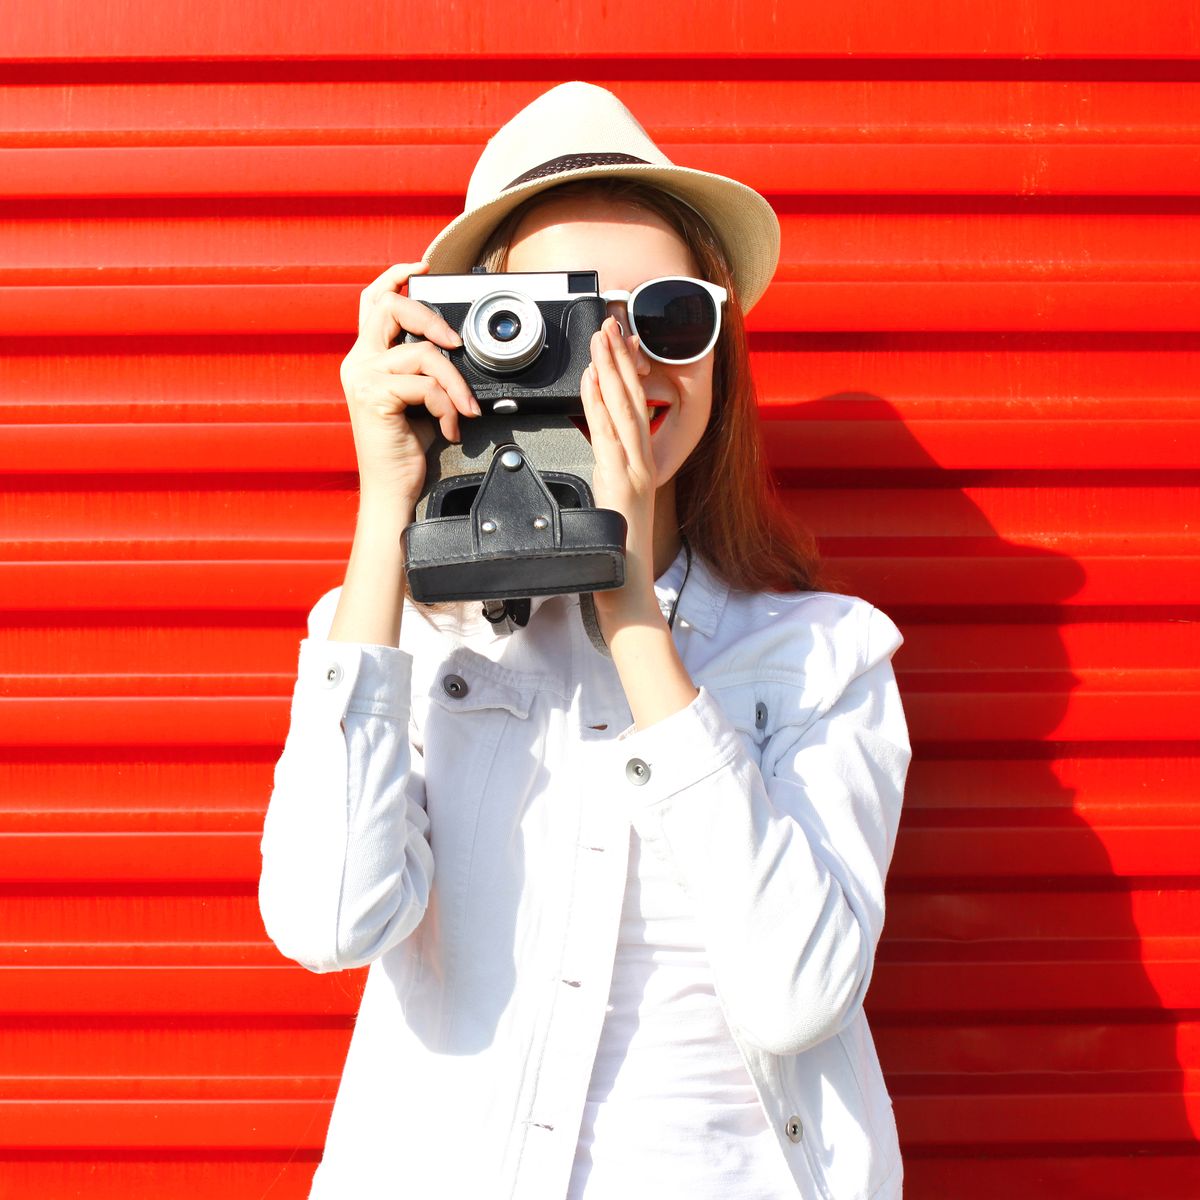 Lo vintage está de moda: 3 tips para tomar fotos con cámaras